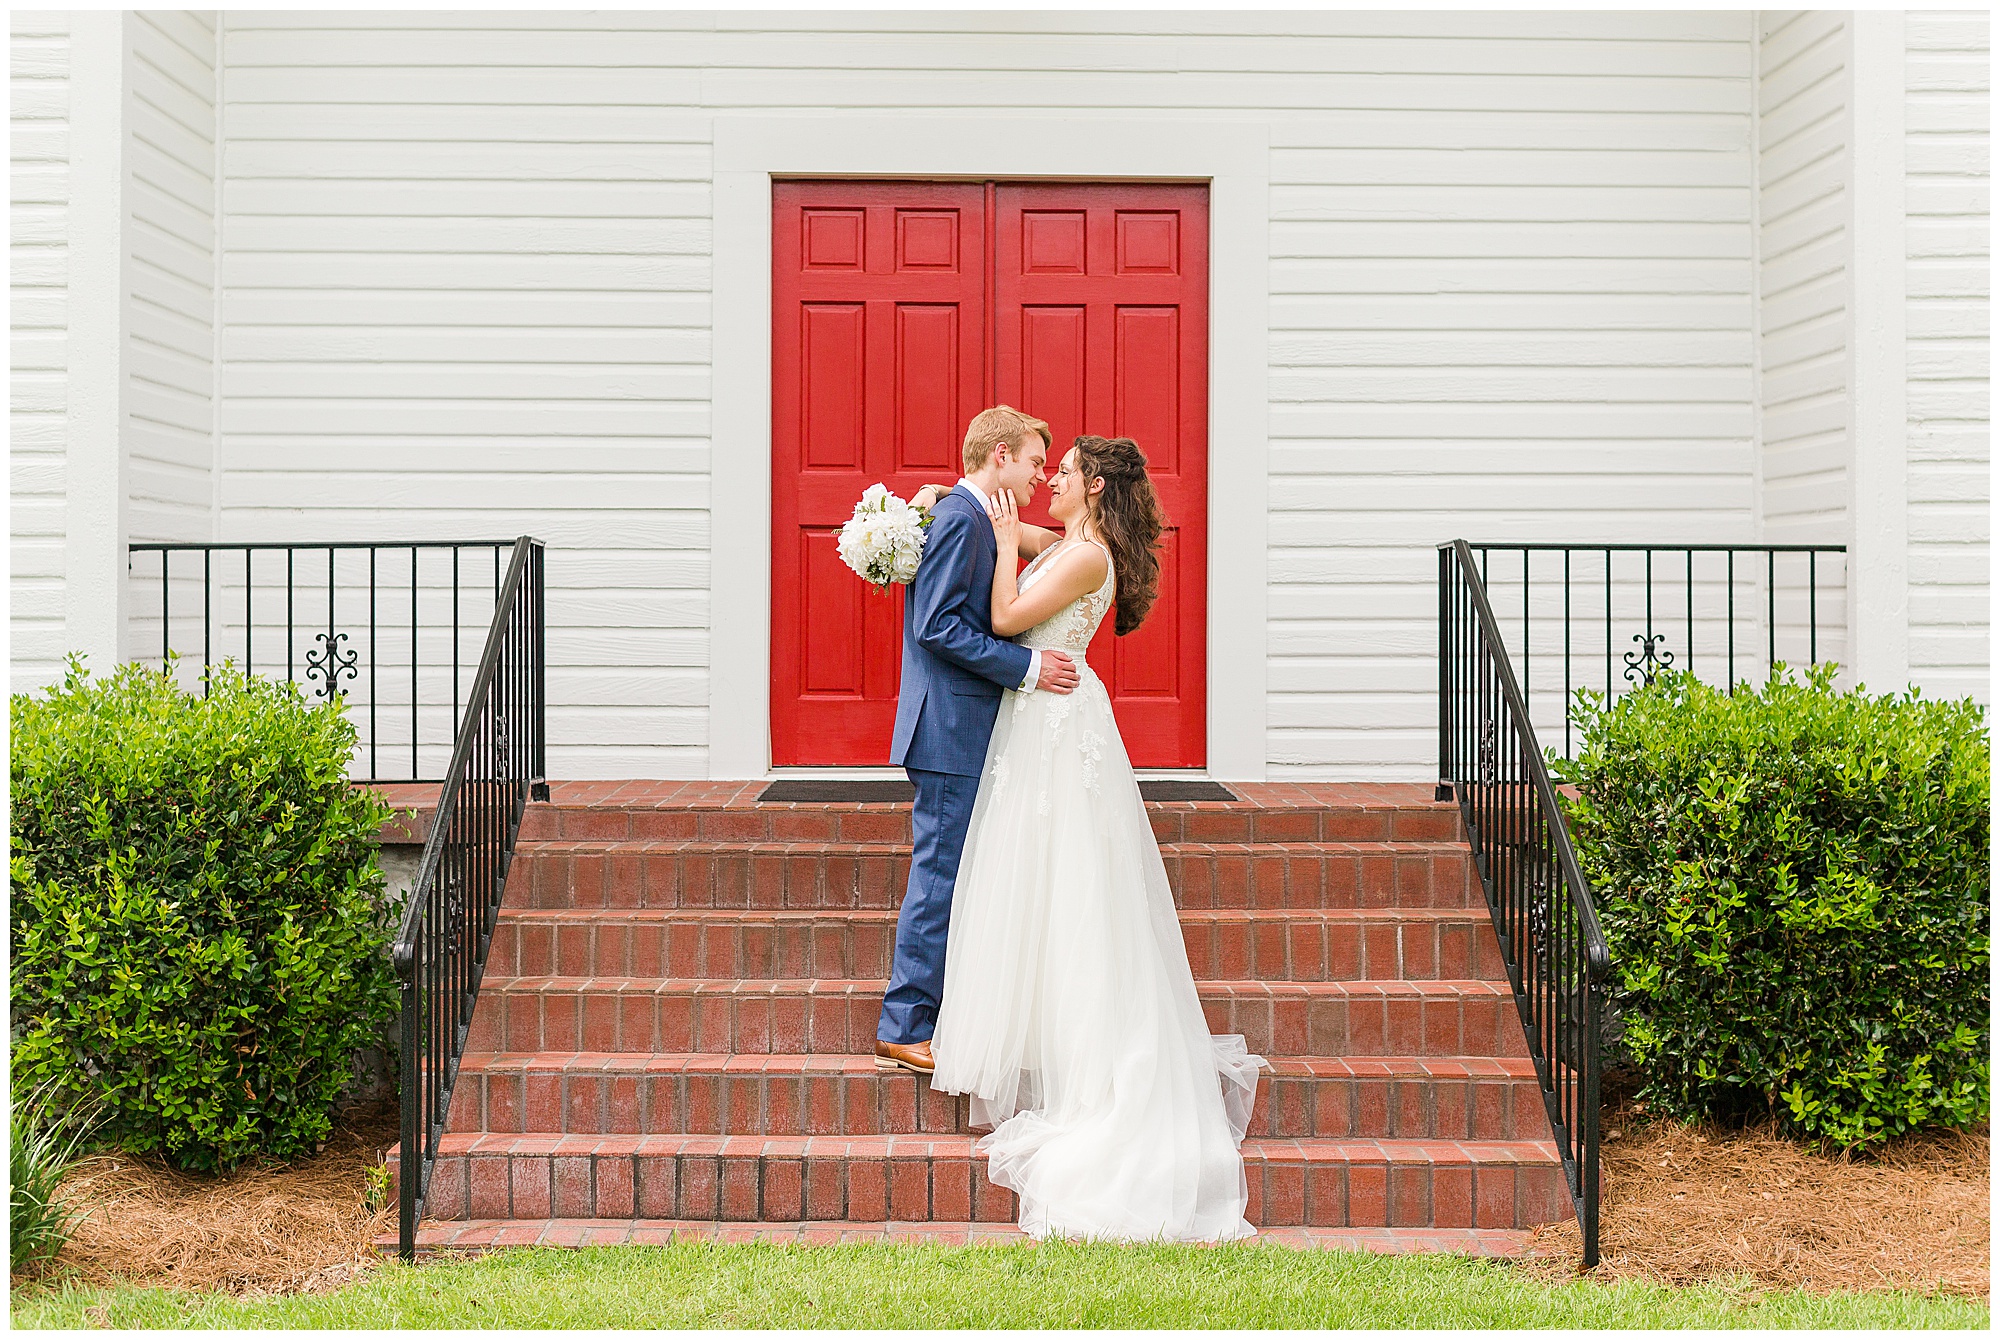 I Do BBQ wedding, Georgia wedding, Kelley Stinson Photography, red white and blue wedding, red door church, historic church